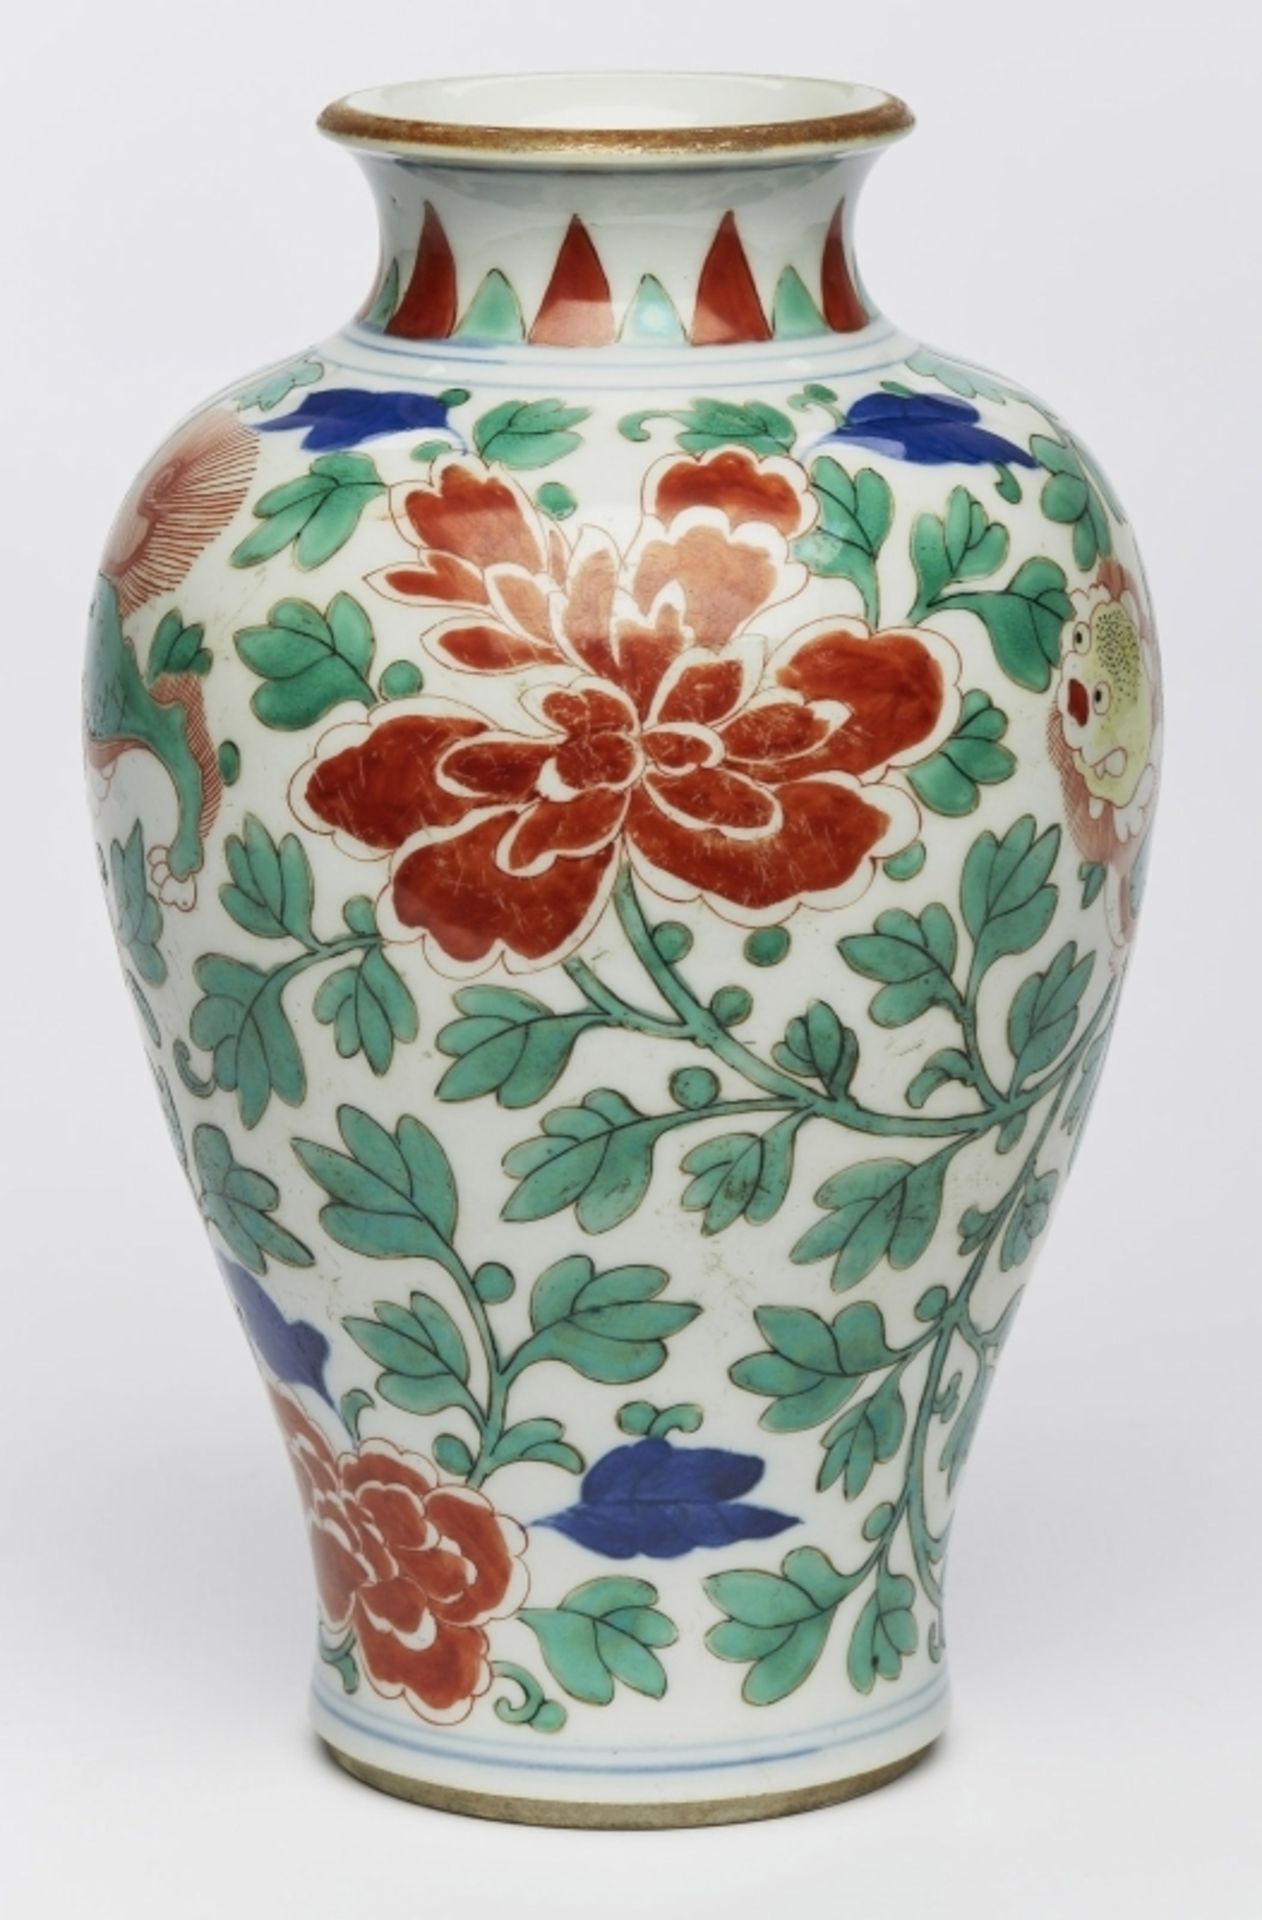 Kl. Vase "Blüten und Phohunde", China wohl 18 Jh.